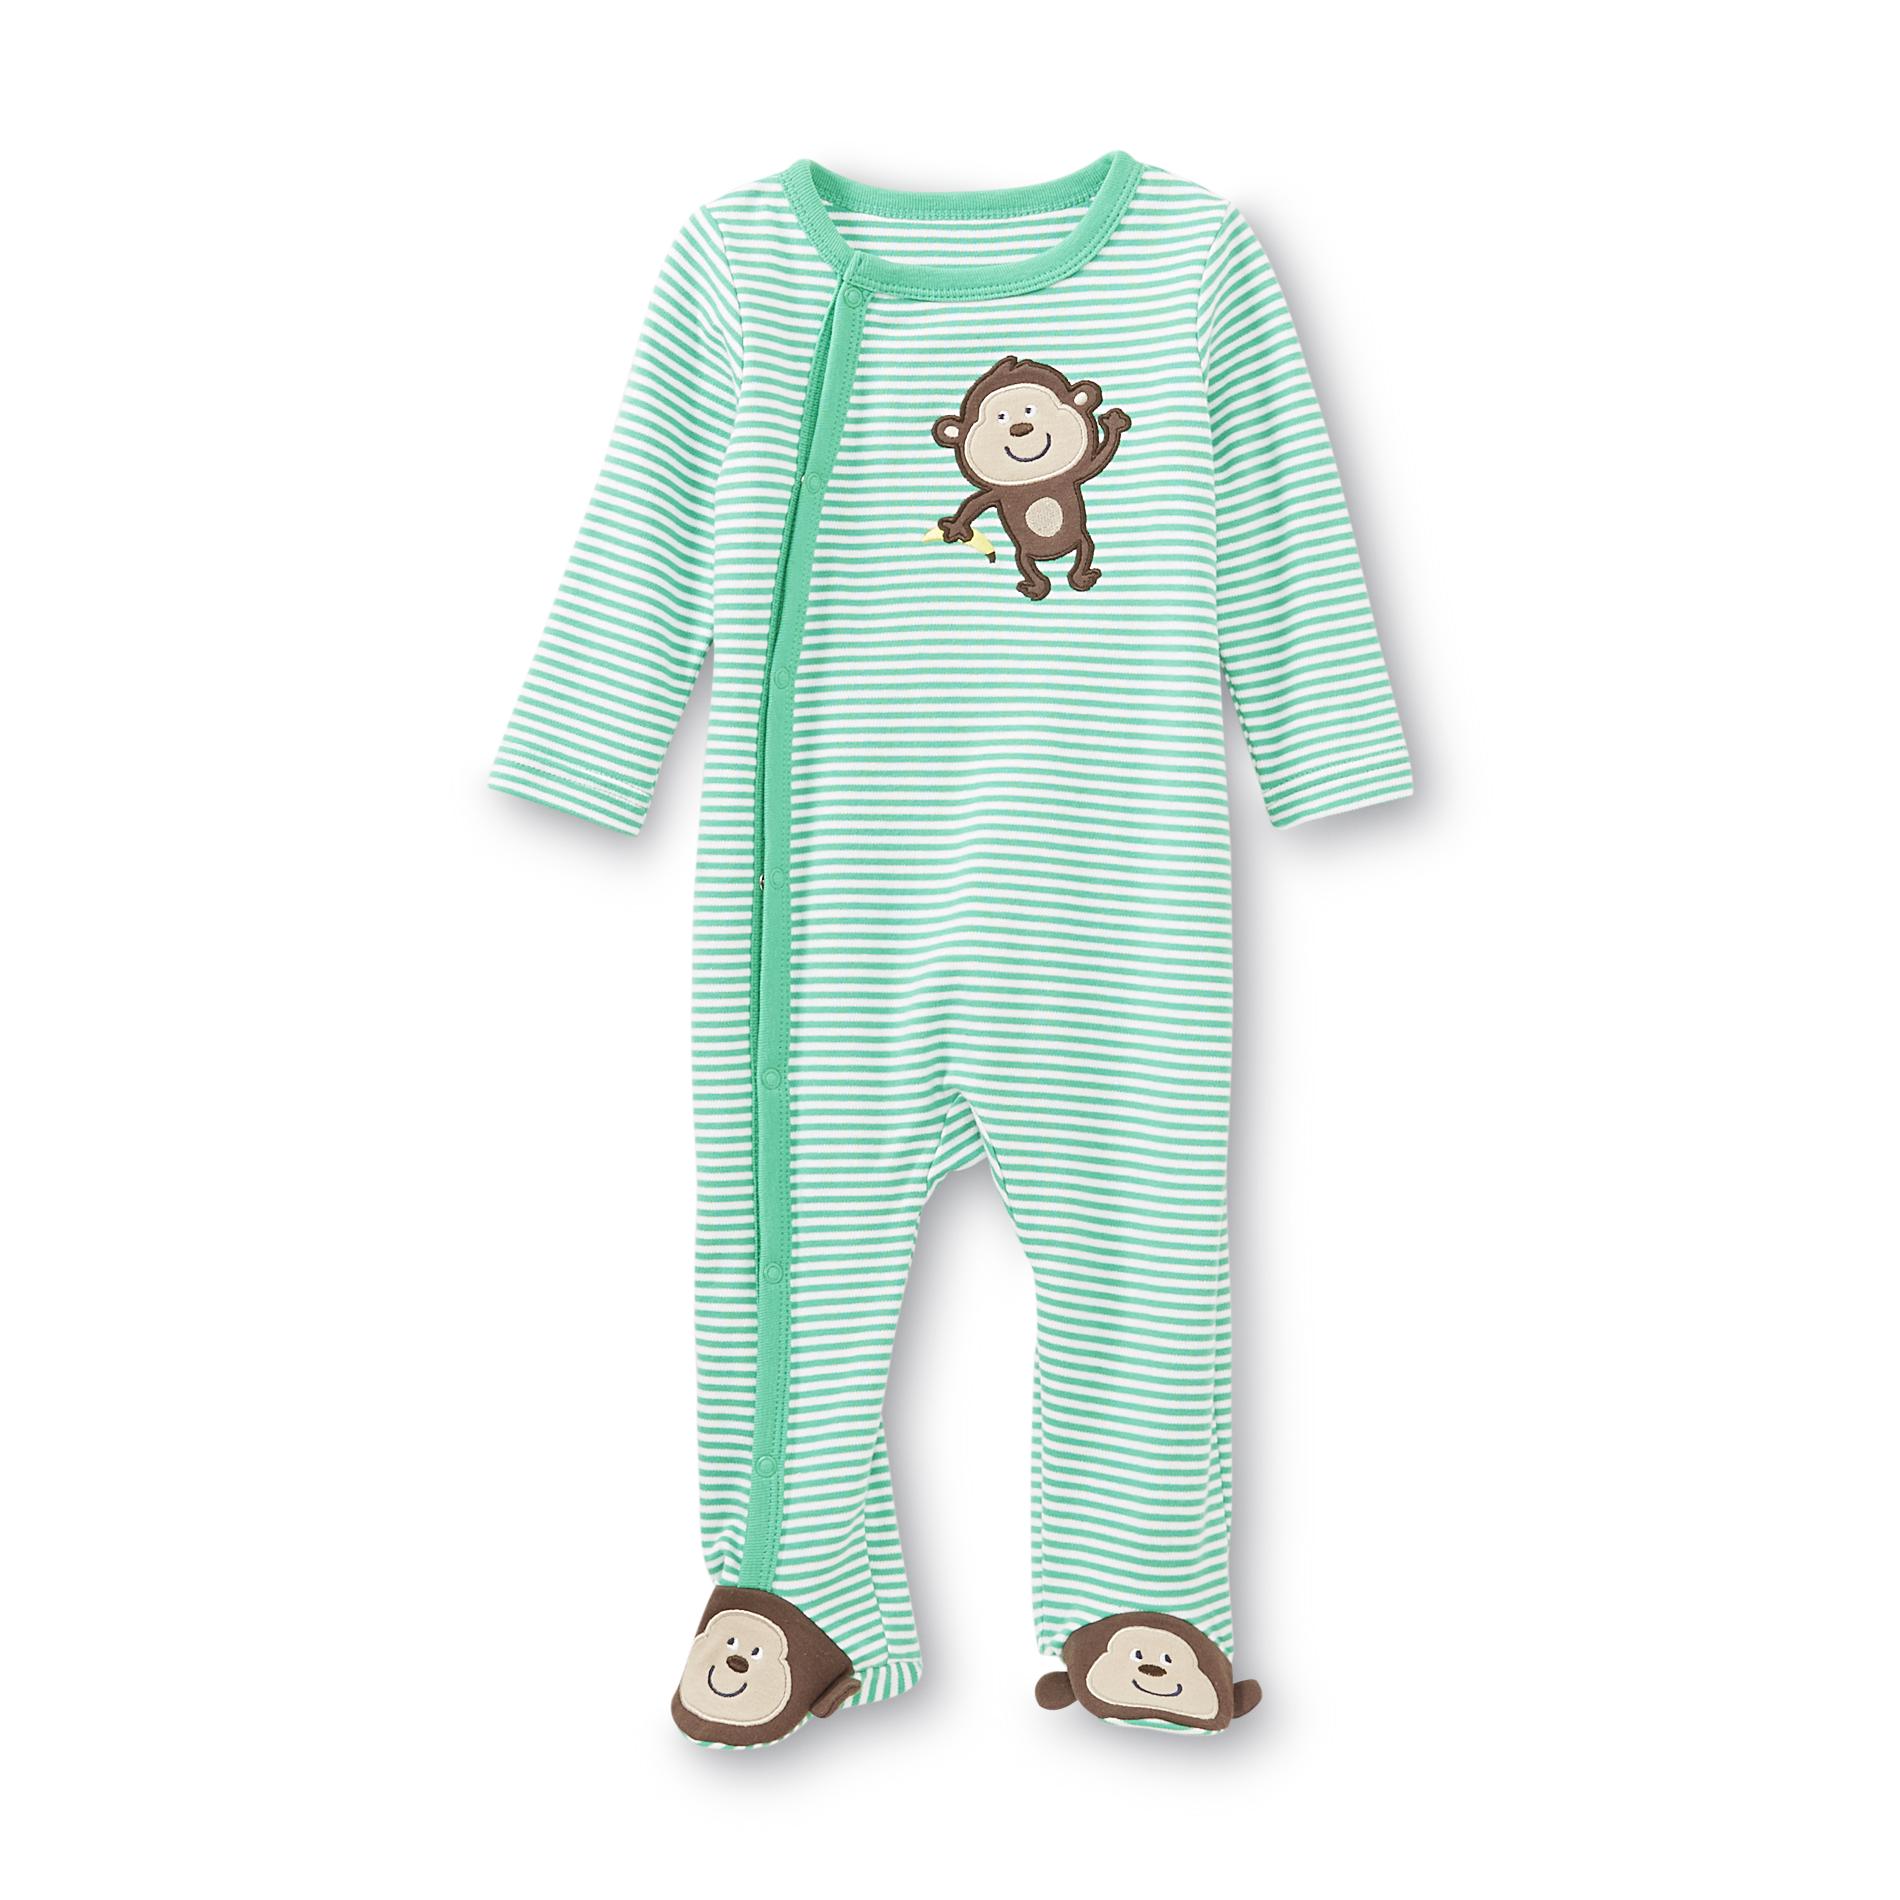 Little Wonders Newborn Boy's Footed Pajamas - Monkey